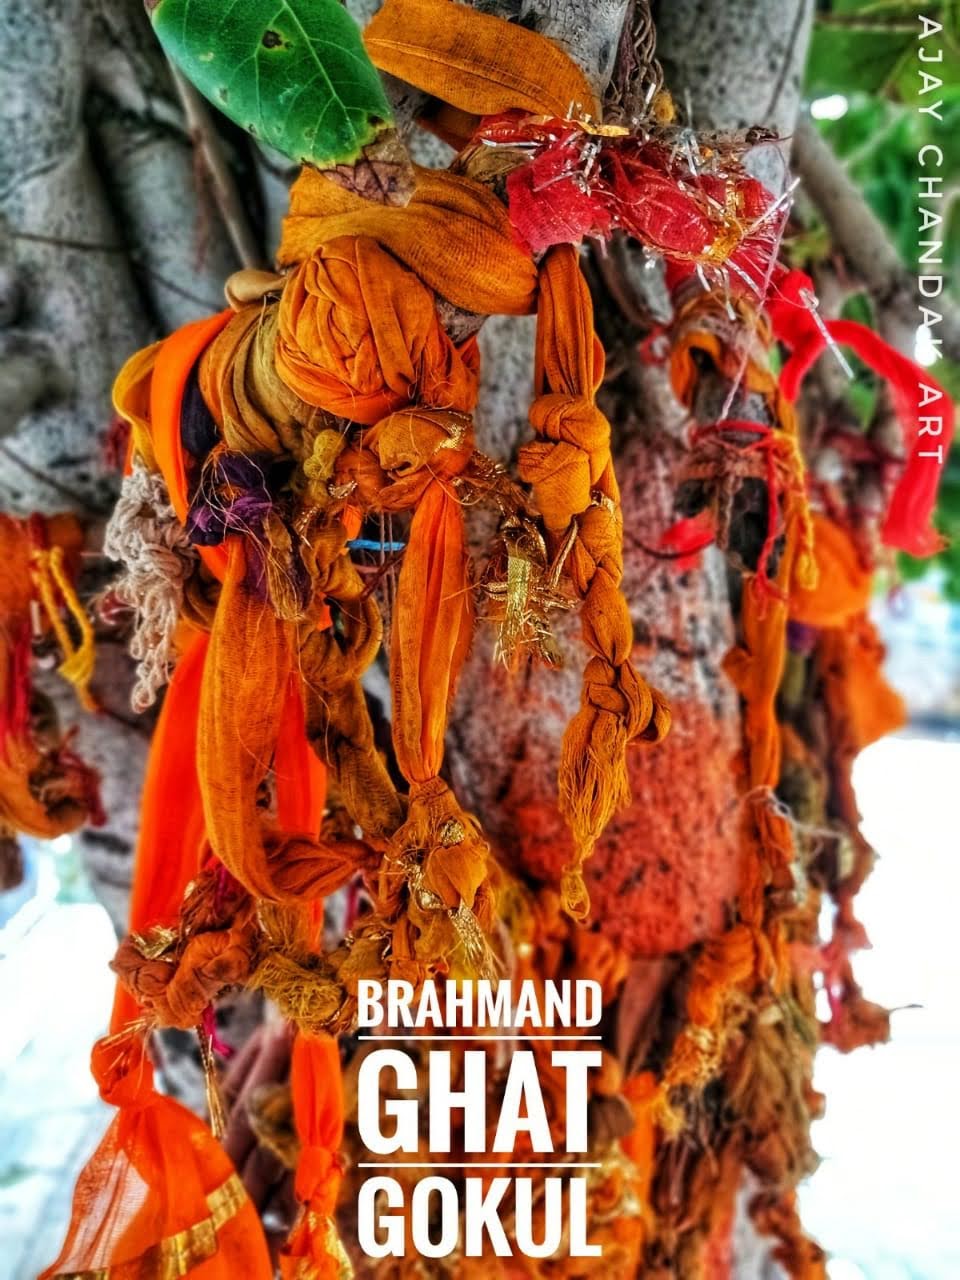 Brahmand Ghat, Gokul, India